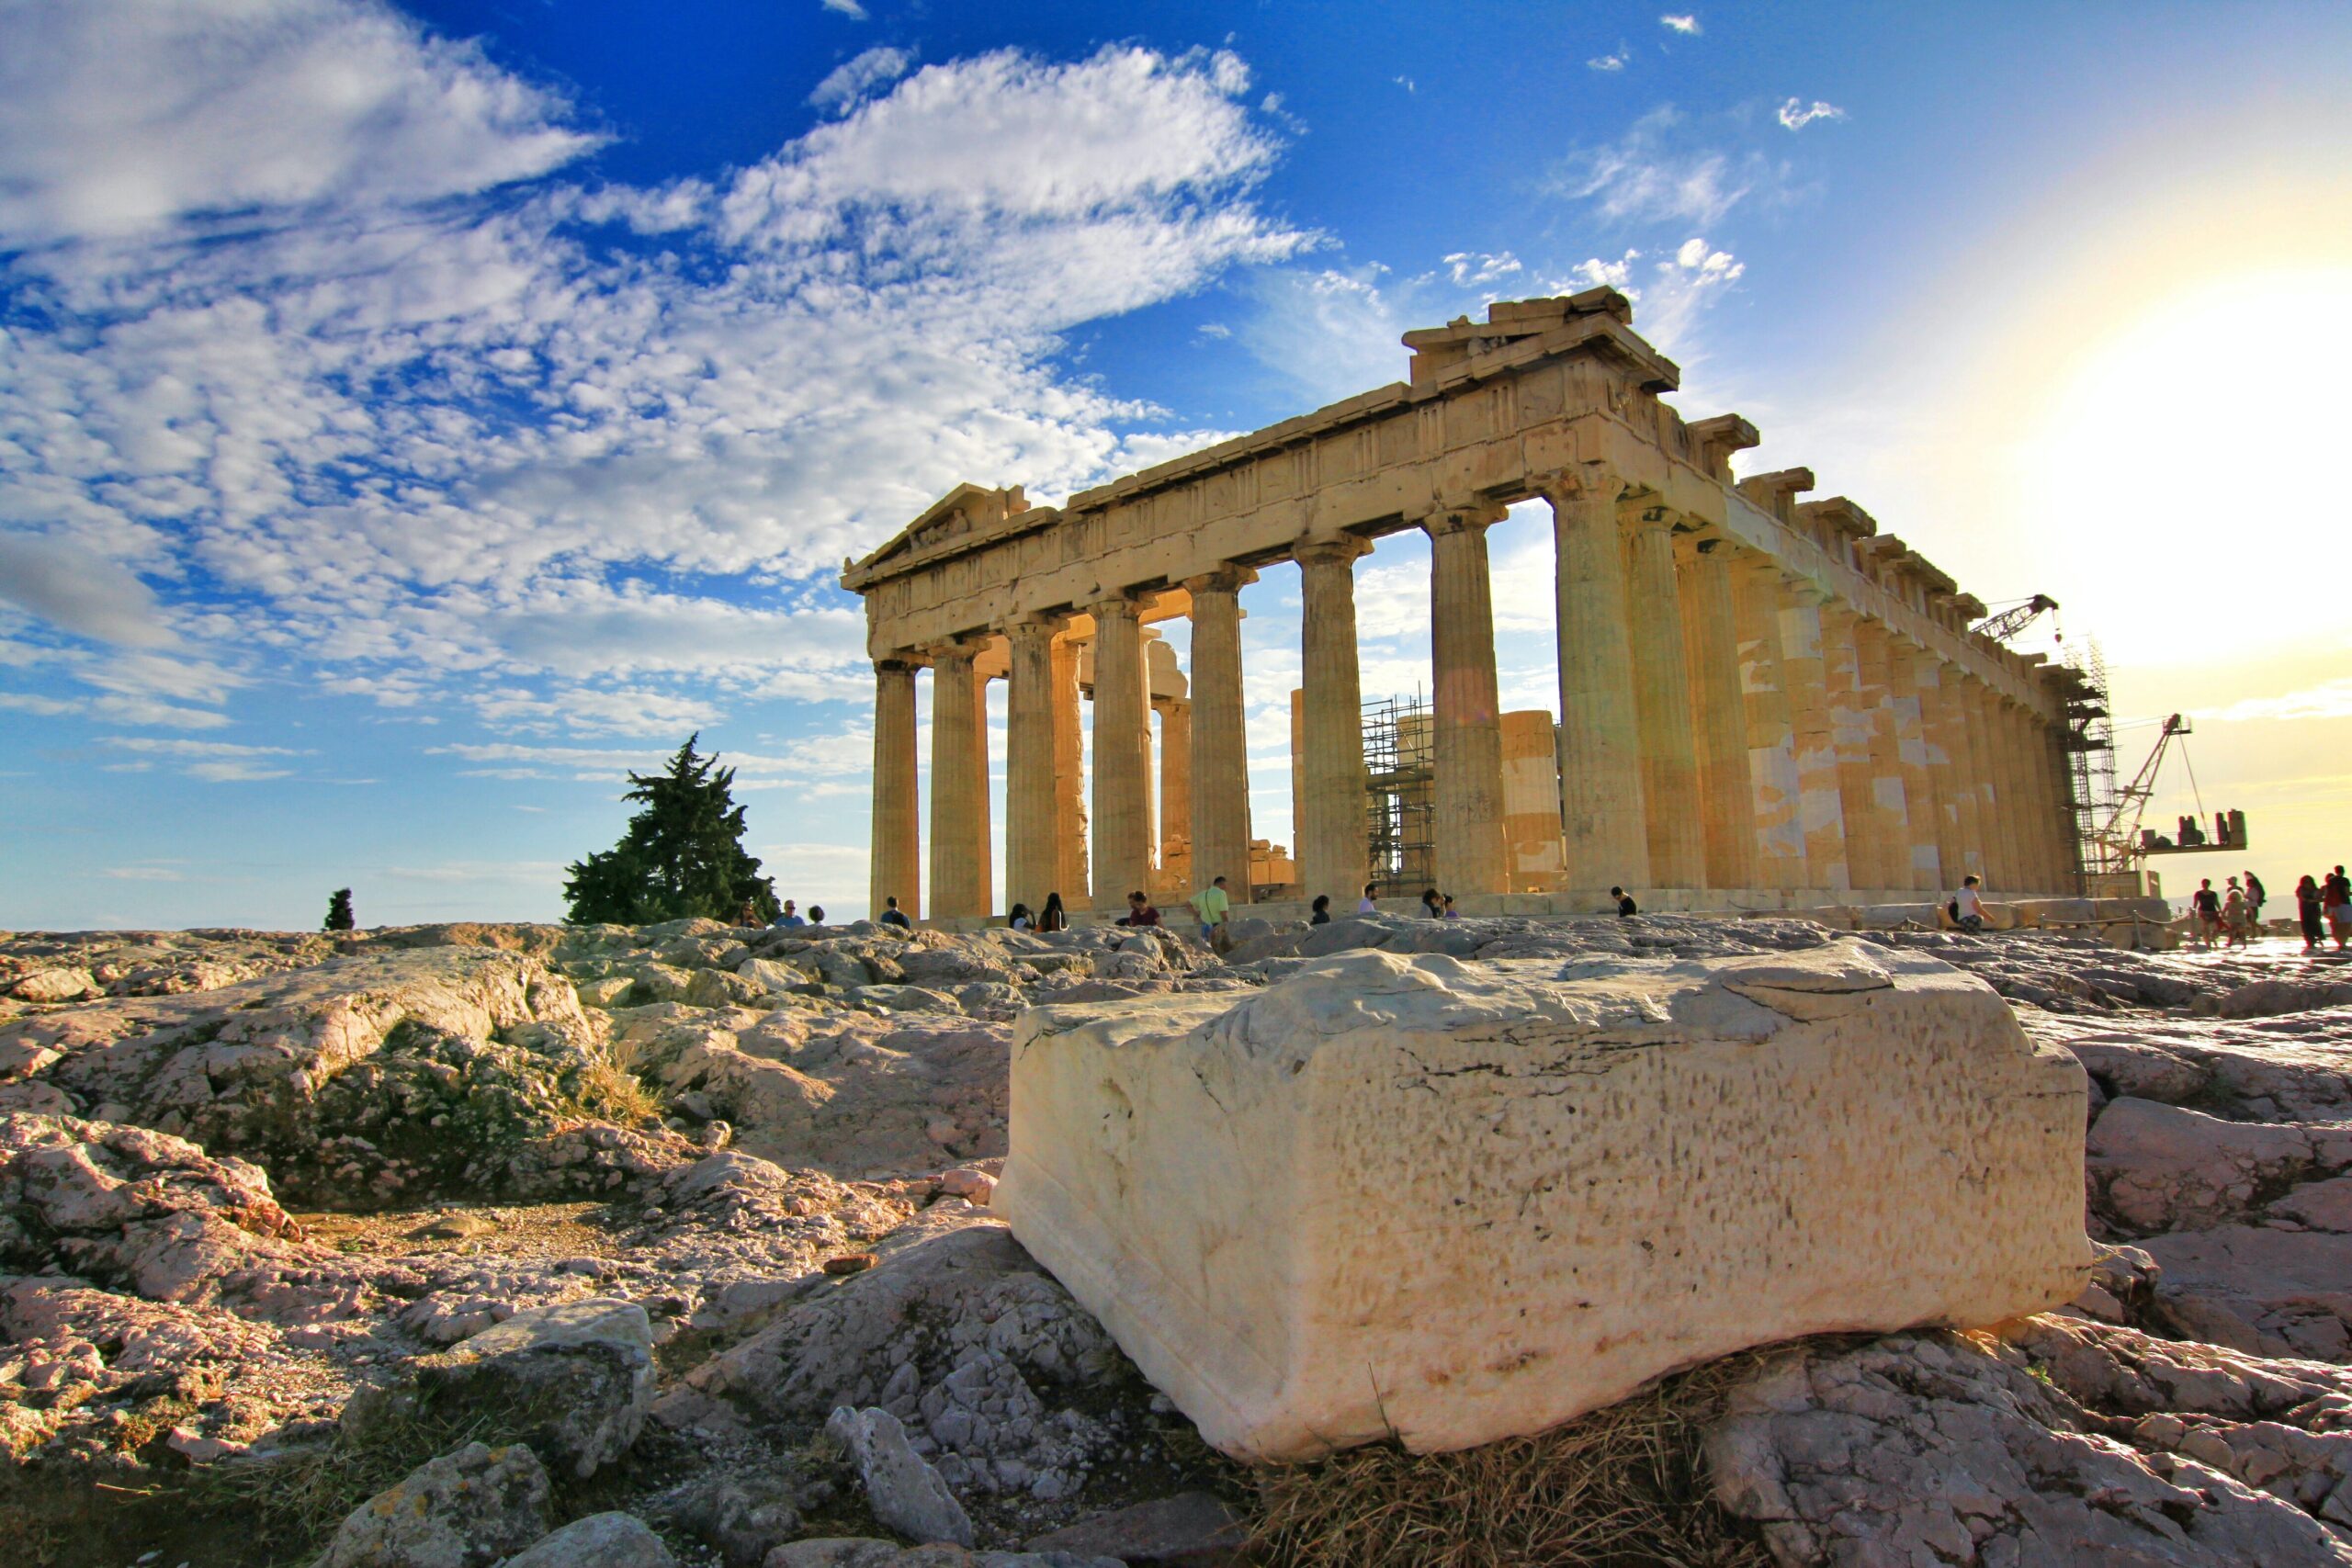 Parthenon in Athens, Greece (Photo Credit: Patrick on Unsplash)